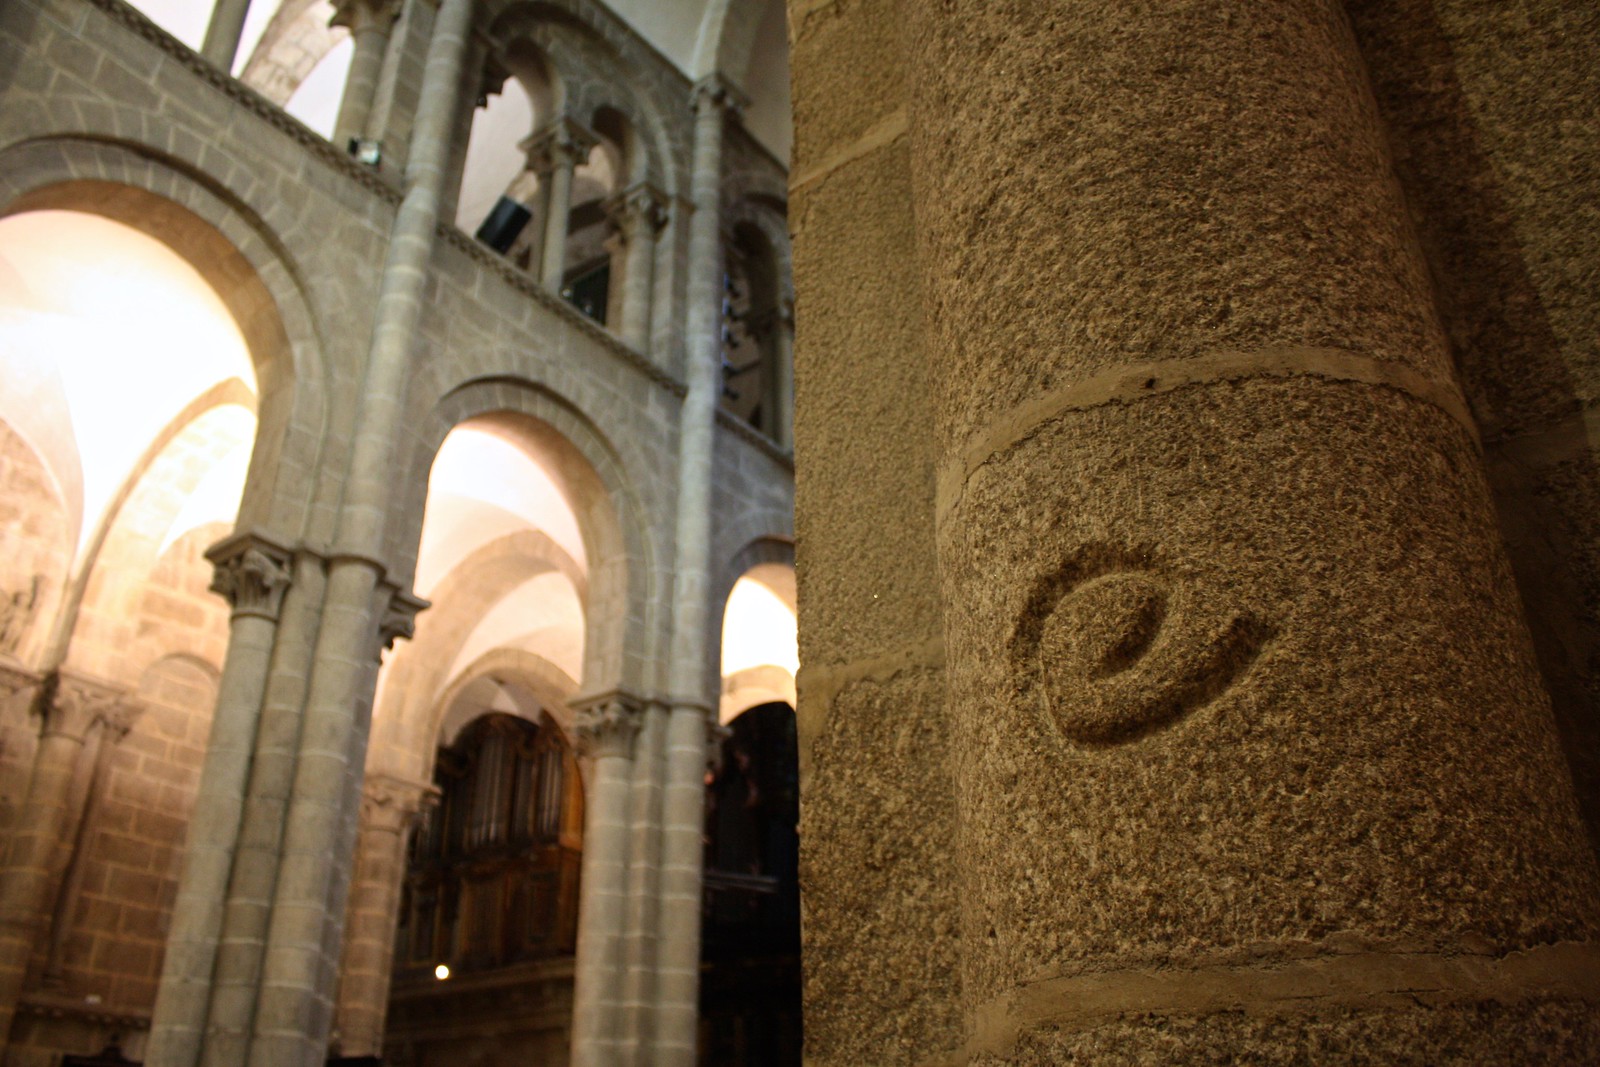 Guided tour of Santiago de Compostela cathedral